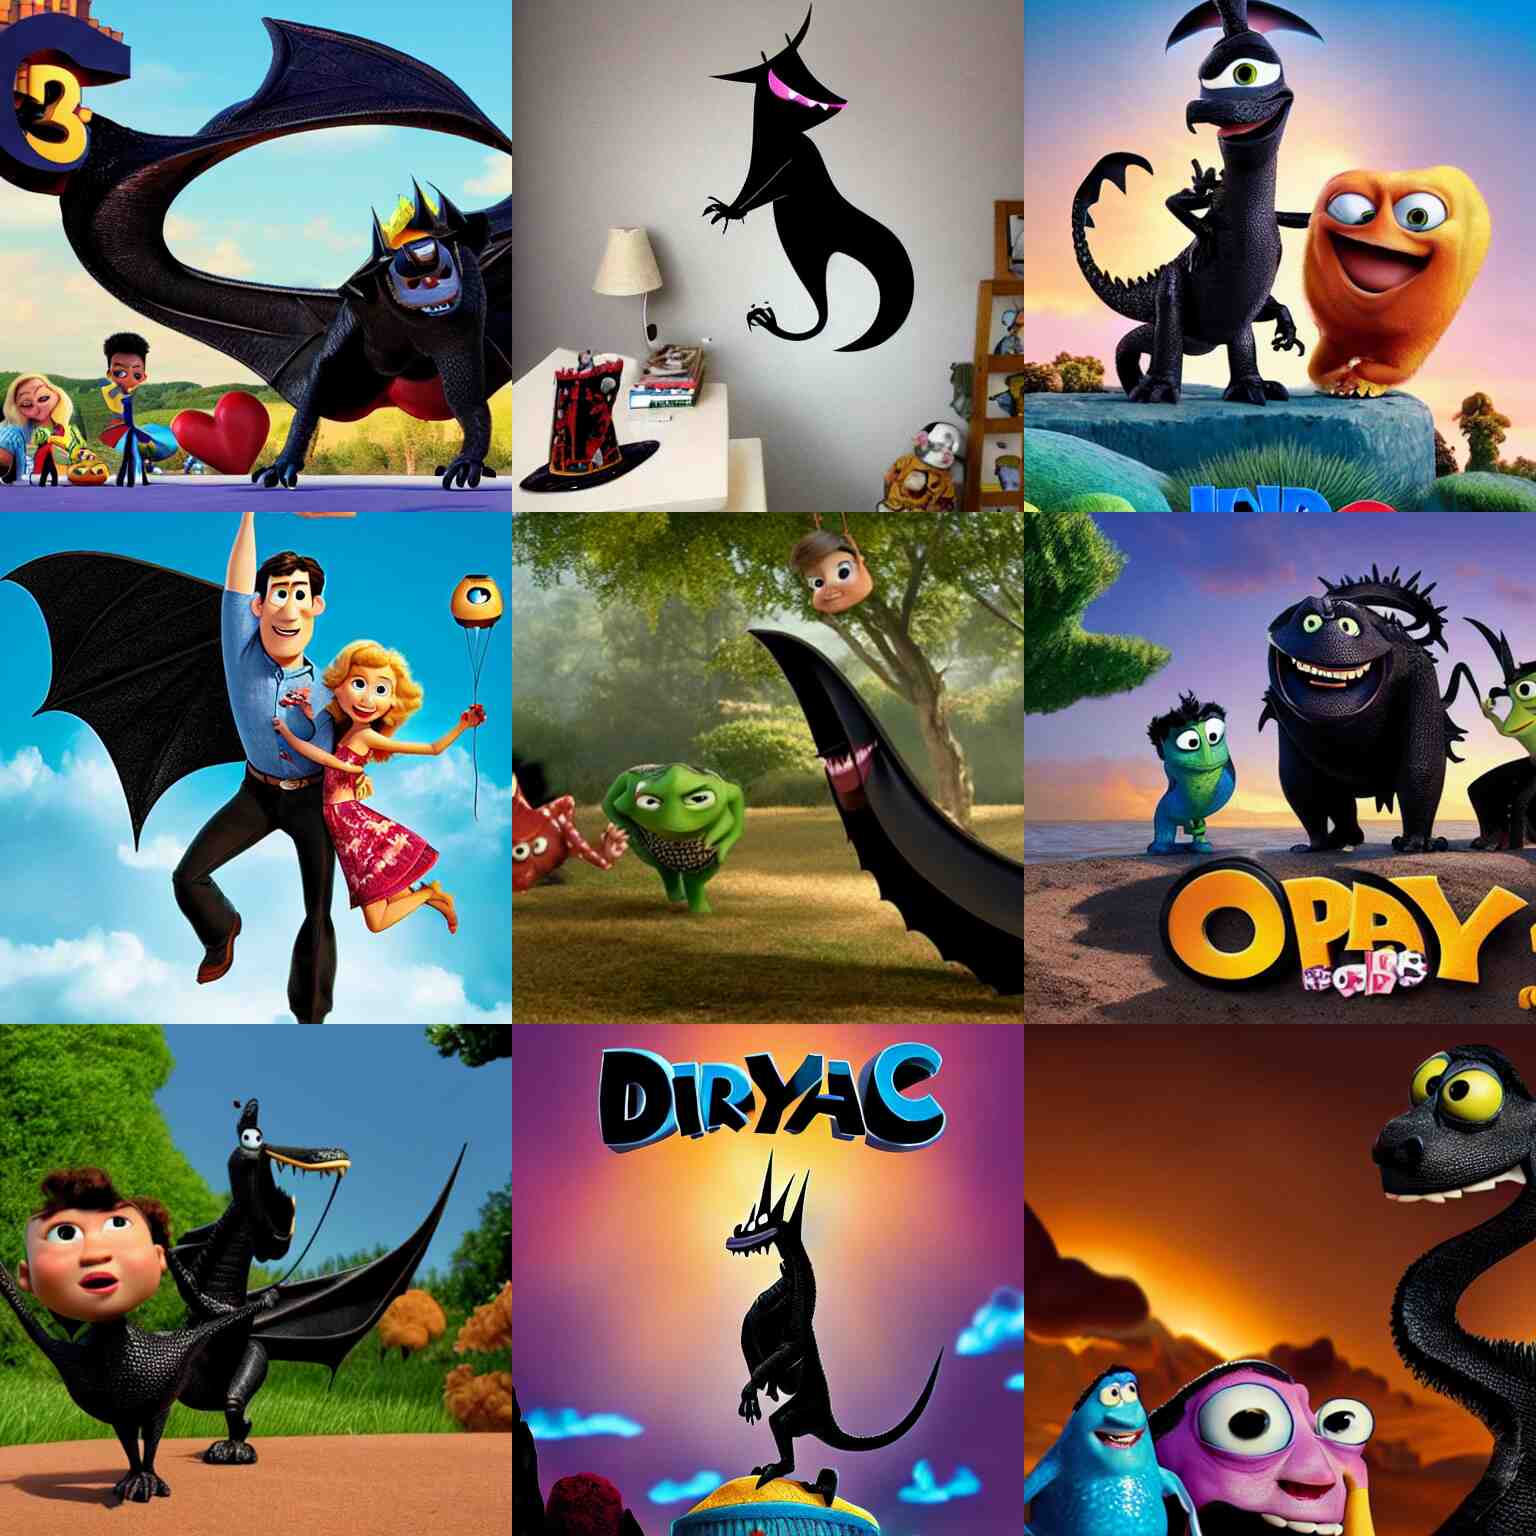 pixar's UP, starring a black dragon